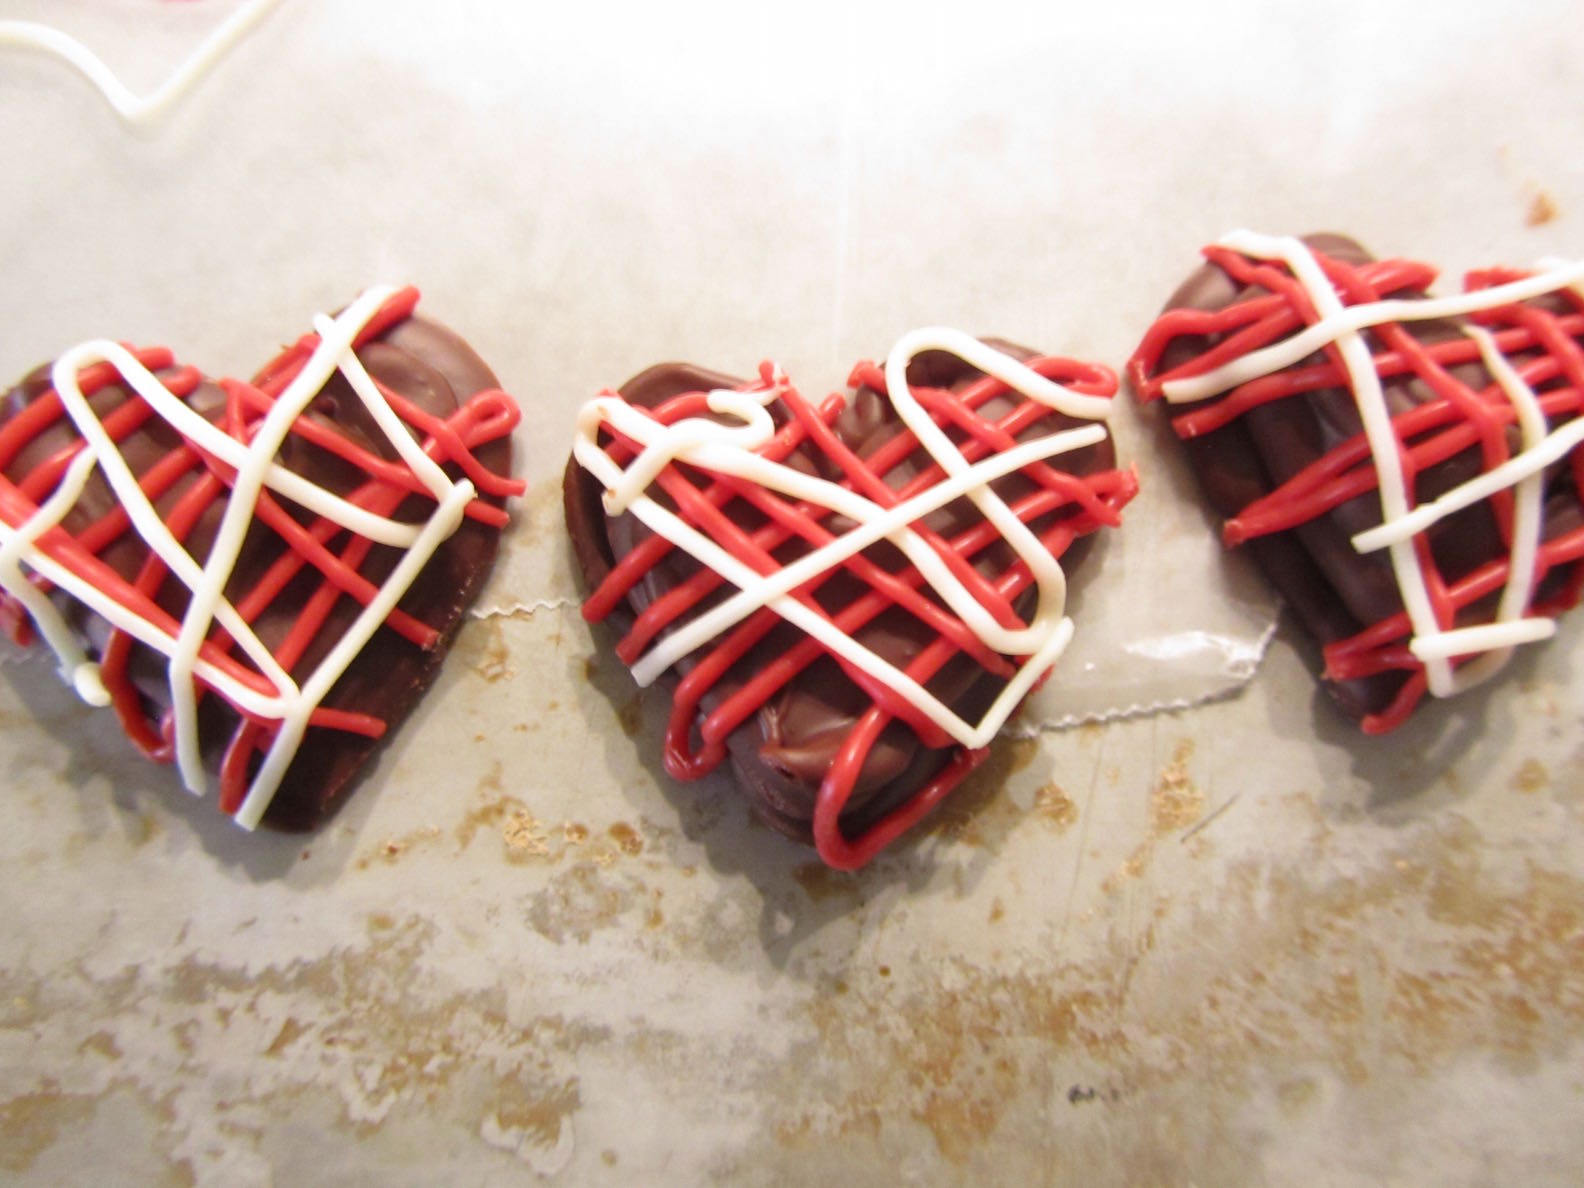 Homemade Chocolate Candy Hearts